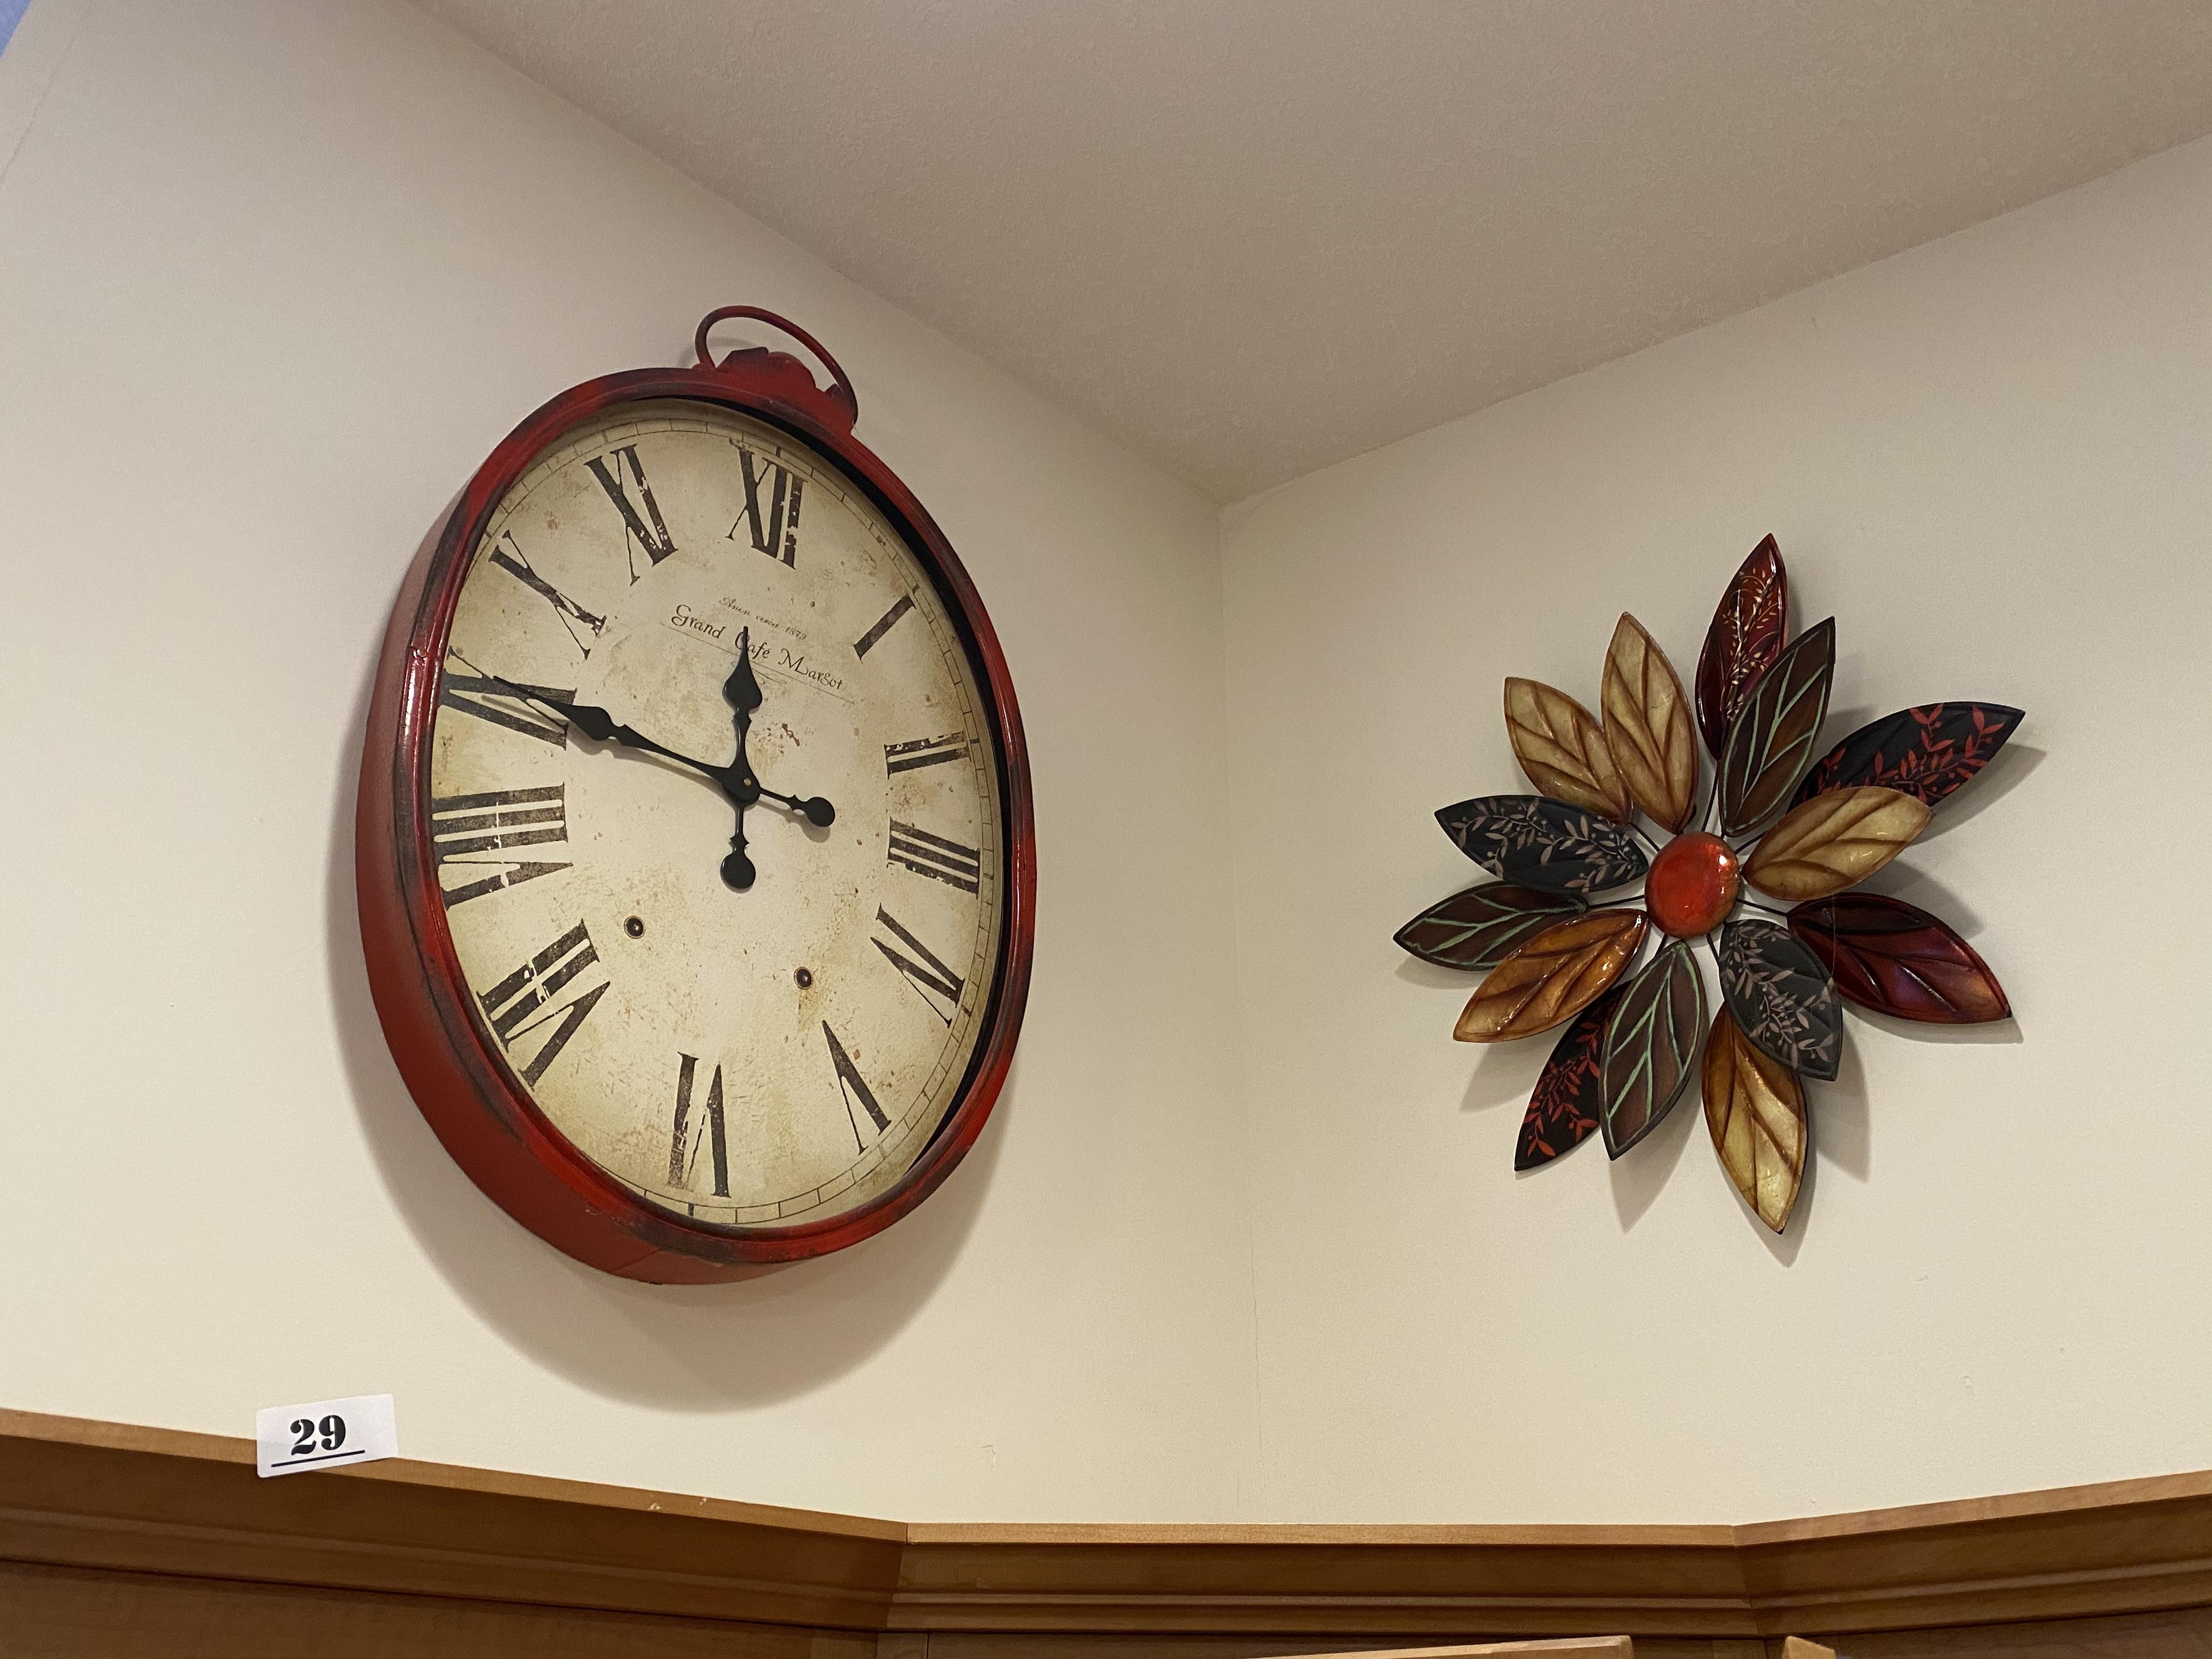 Kitchen clock, measuring about 3' high, plus other kitchen decor.